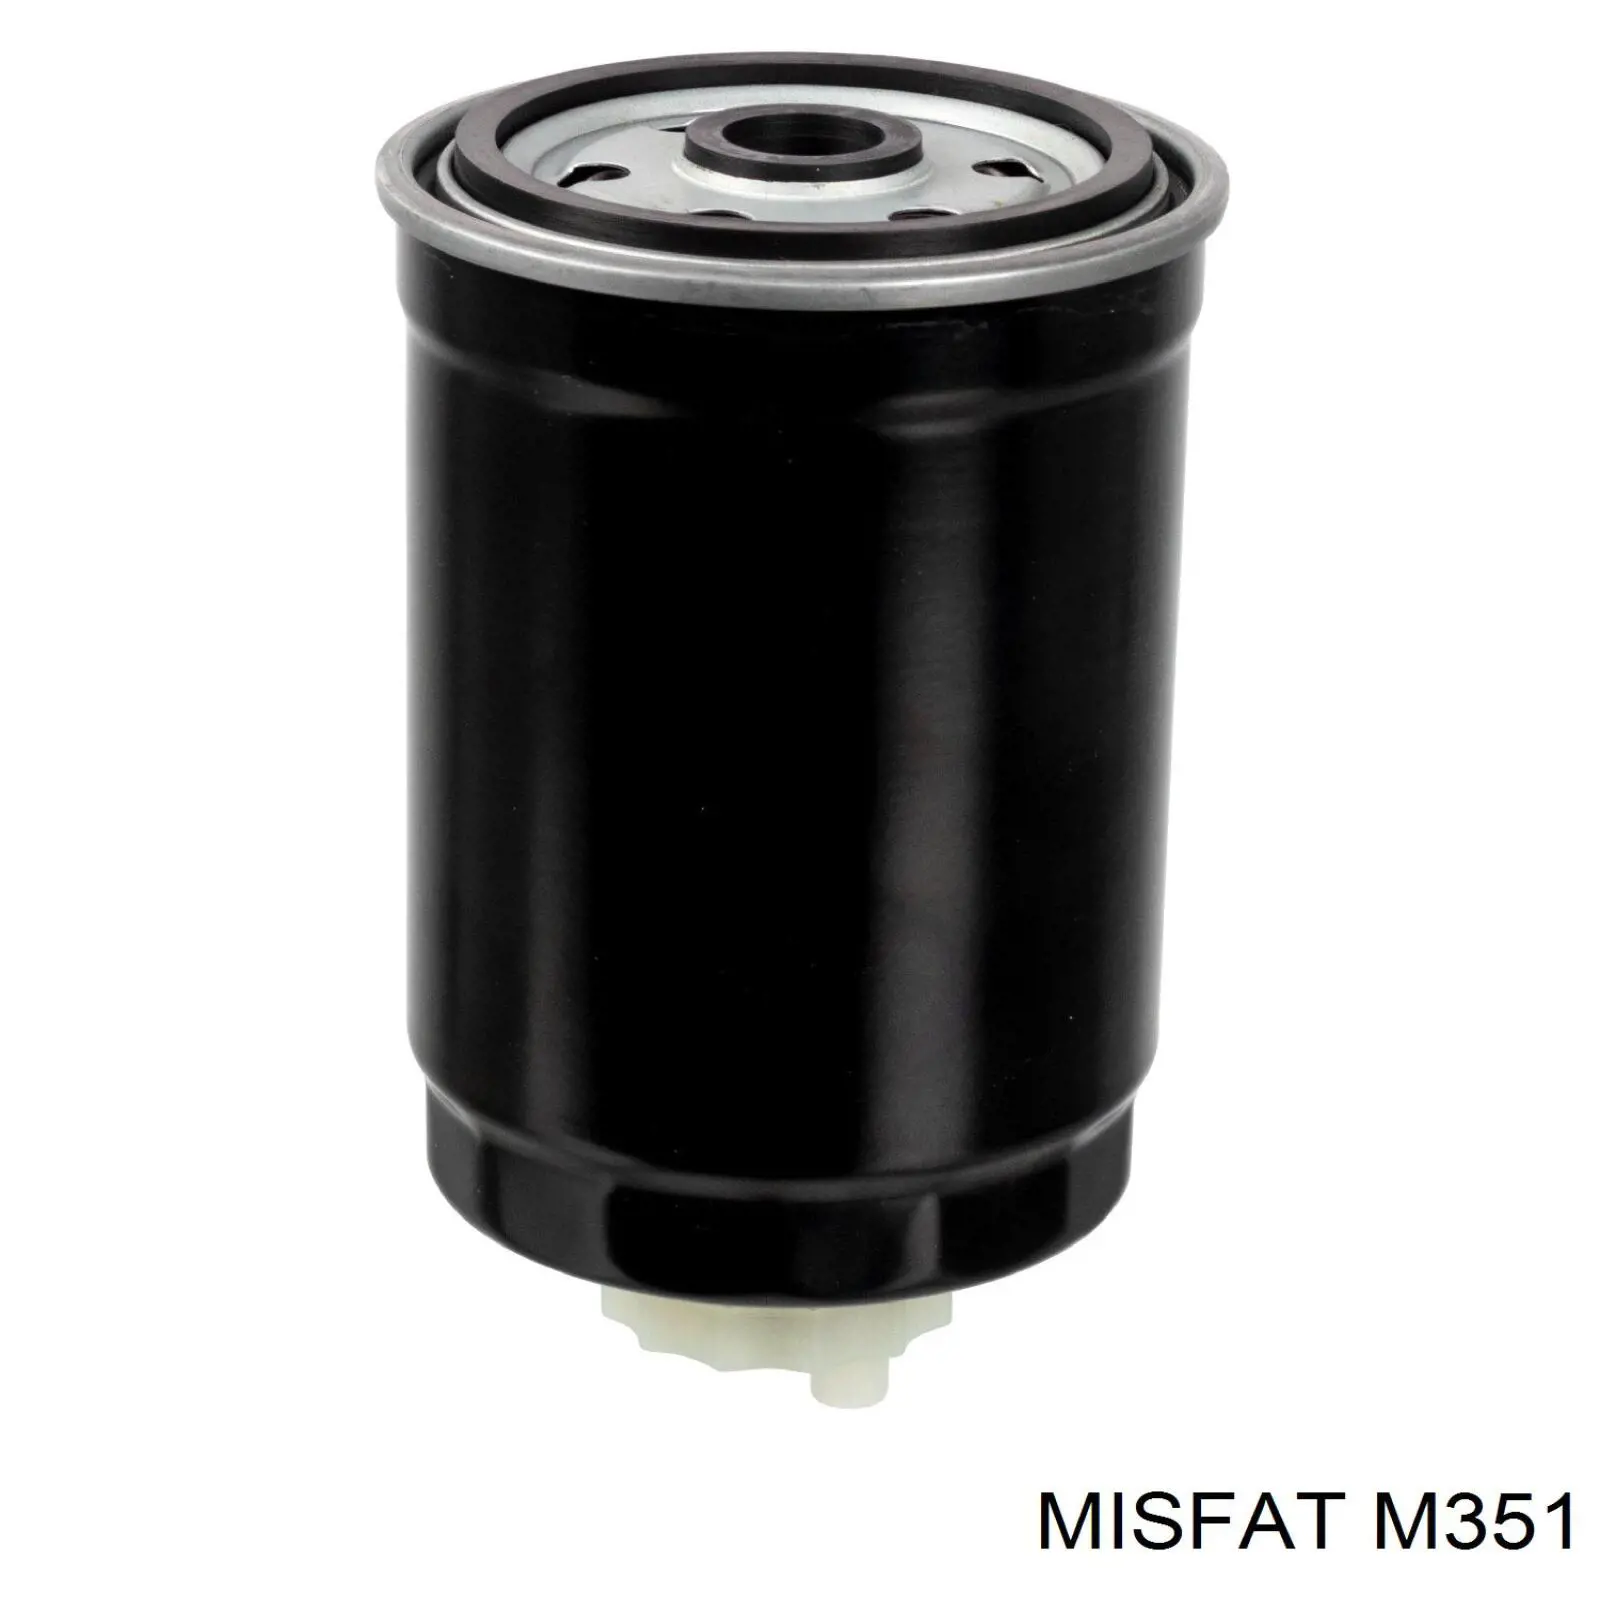 M351 Misfat filtro de combustible